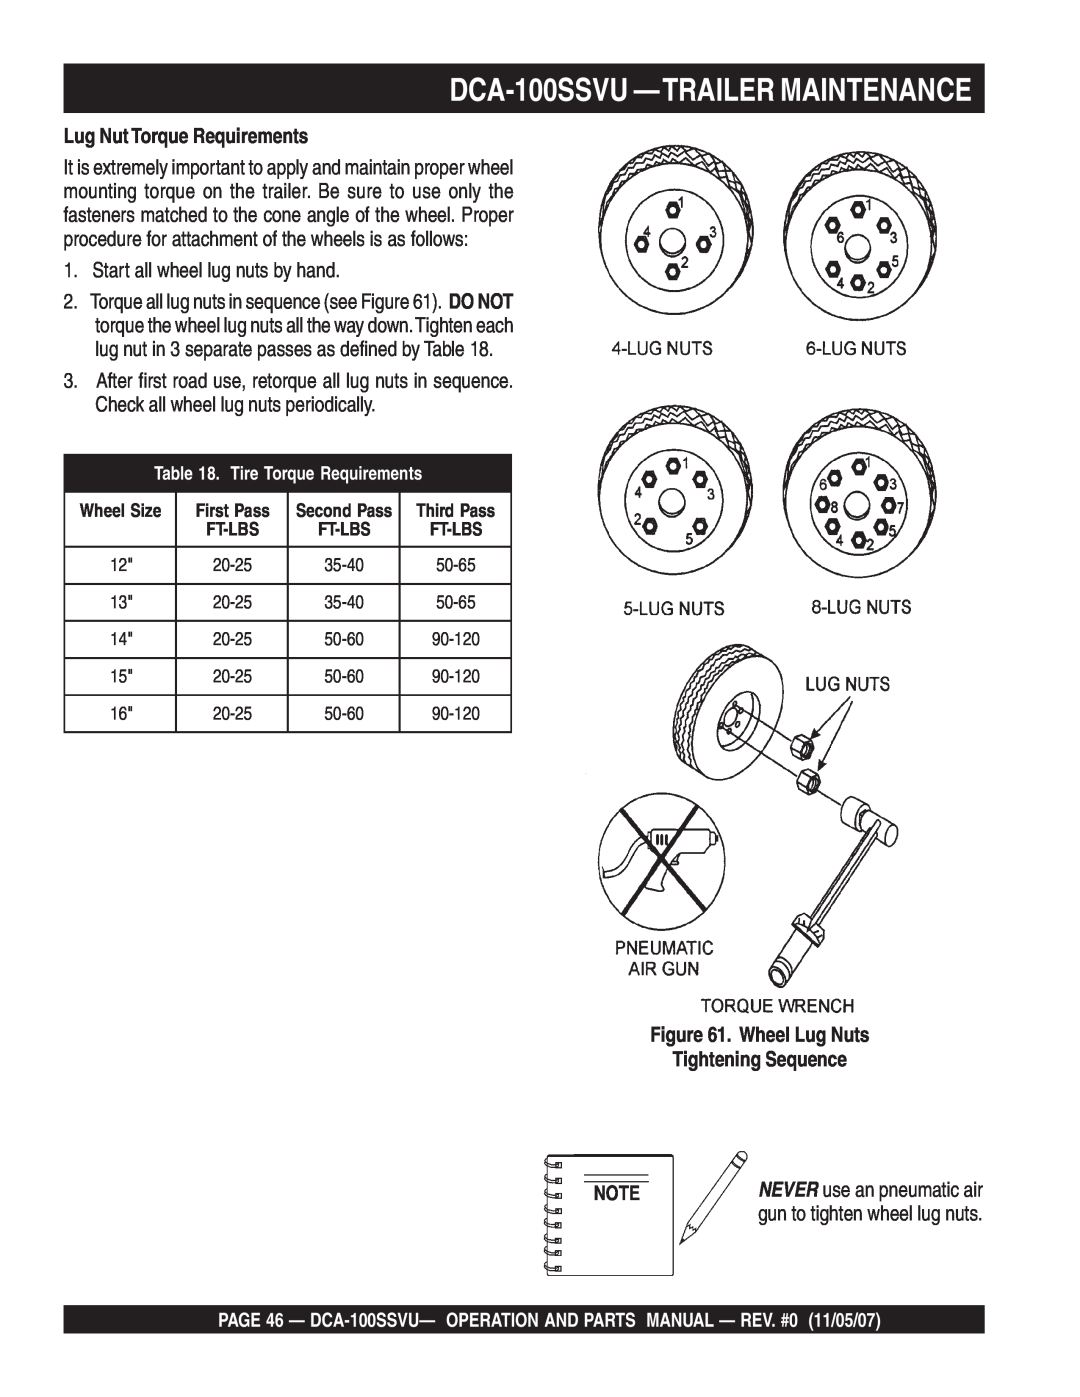 Multiquip DCA-100SSVU —TRAILERMAINTENANCE, Lug Nut Torque Requirements, Wheel Lug Nuts Tightening Sequence, First Pass 